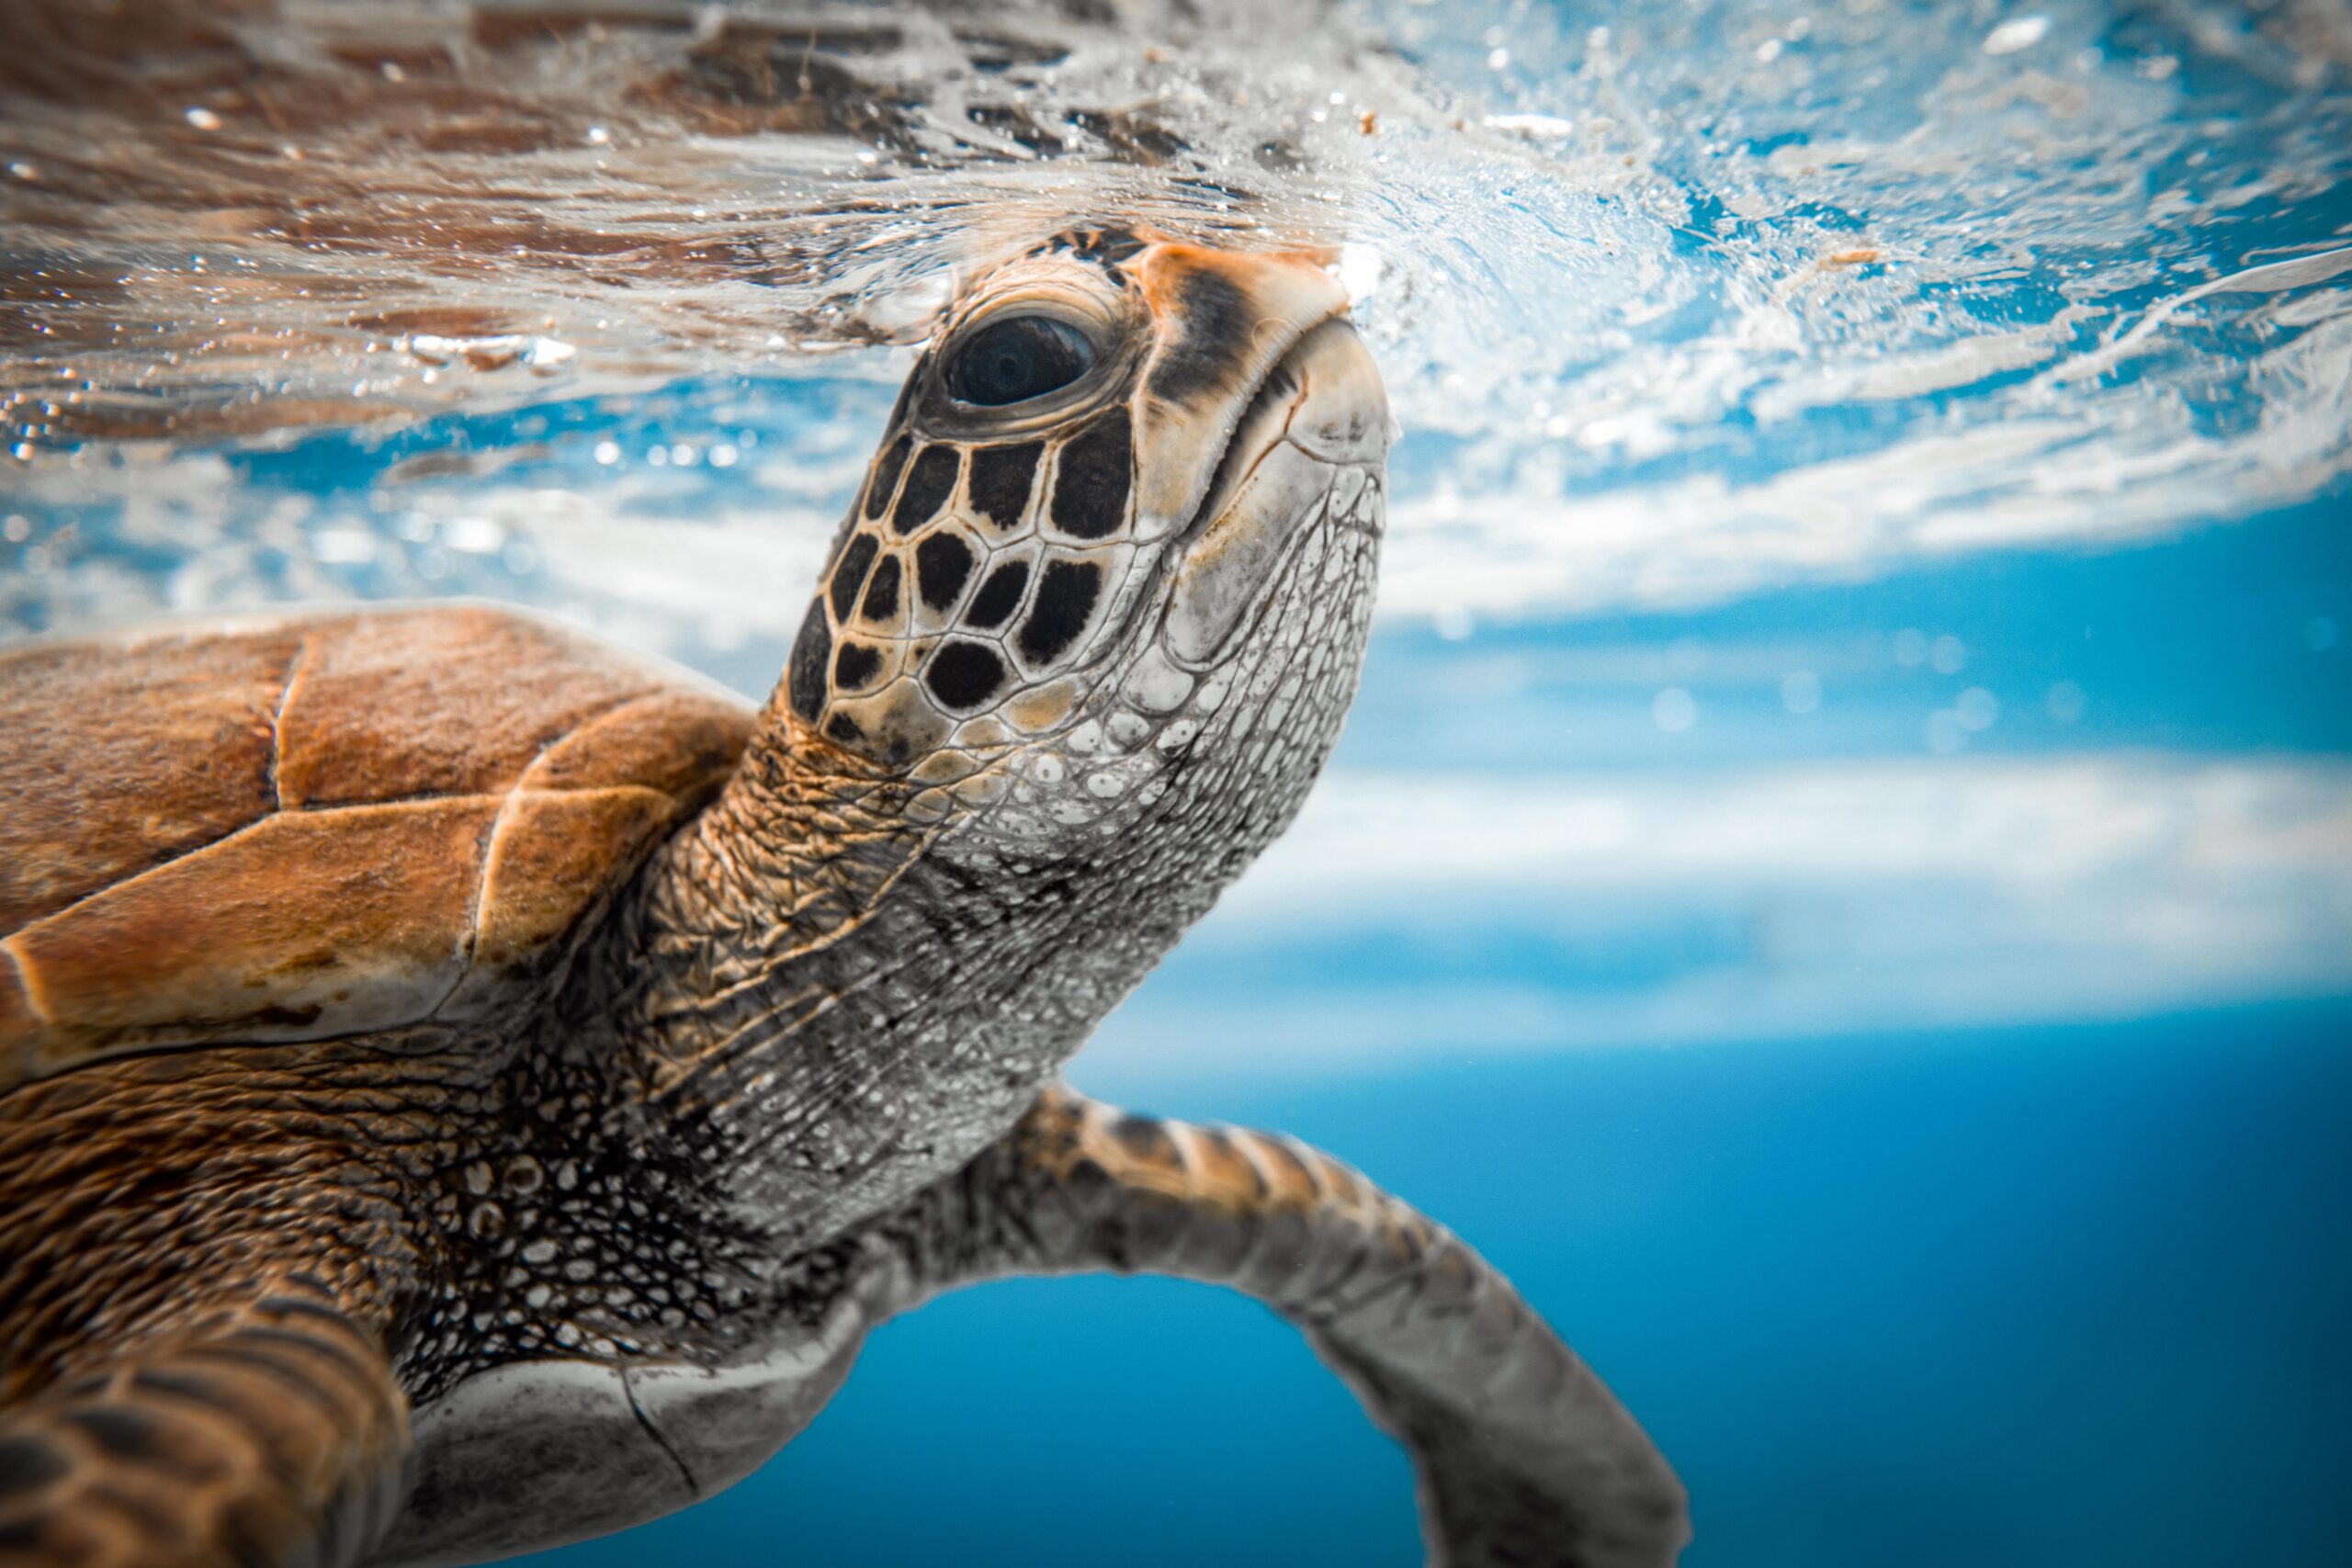 Piho’s turtle photo captures nature prize at Tokyo International Foto Awards